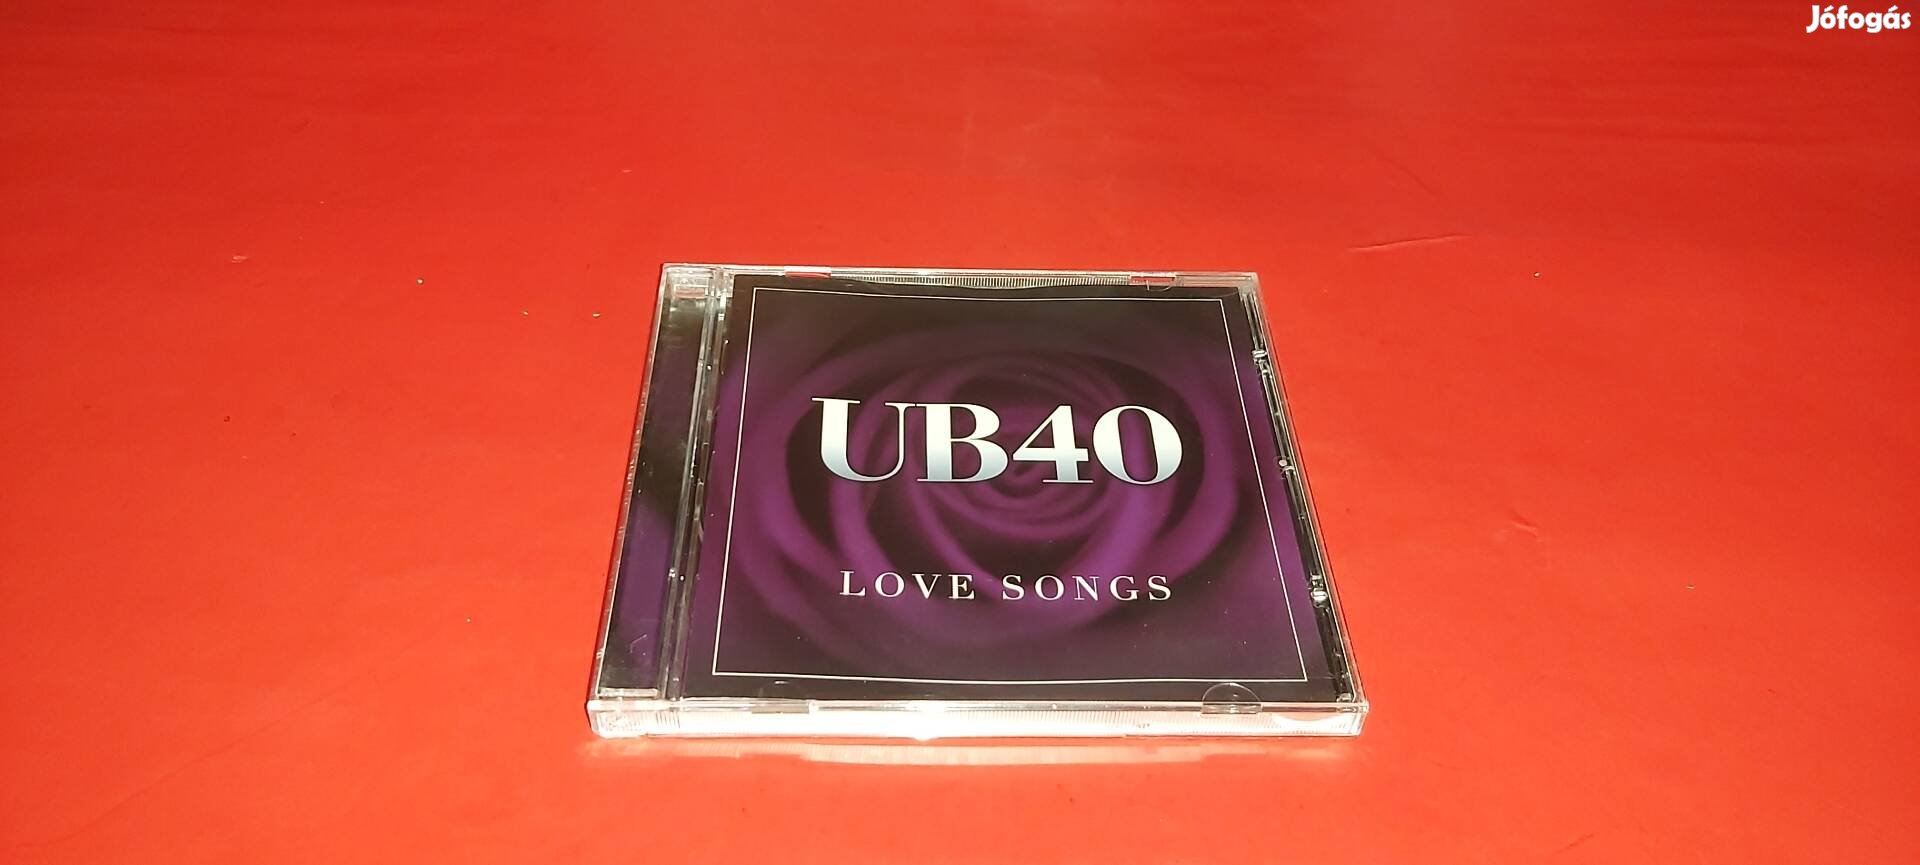 UB40 Love songs Cd 2009